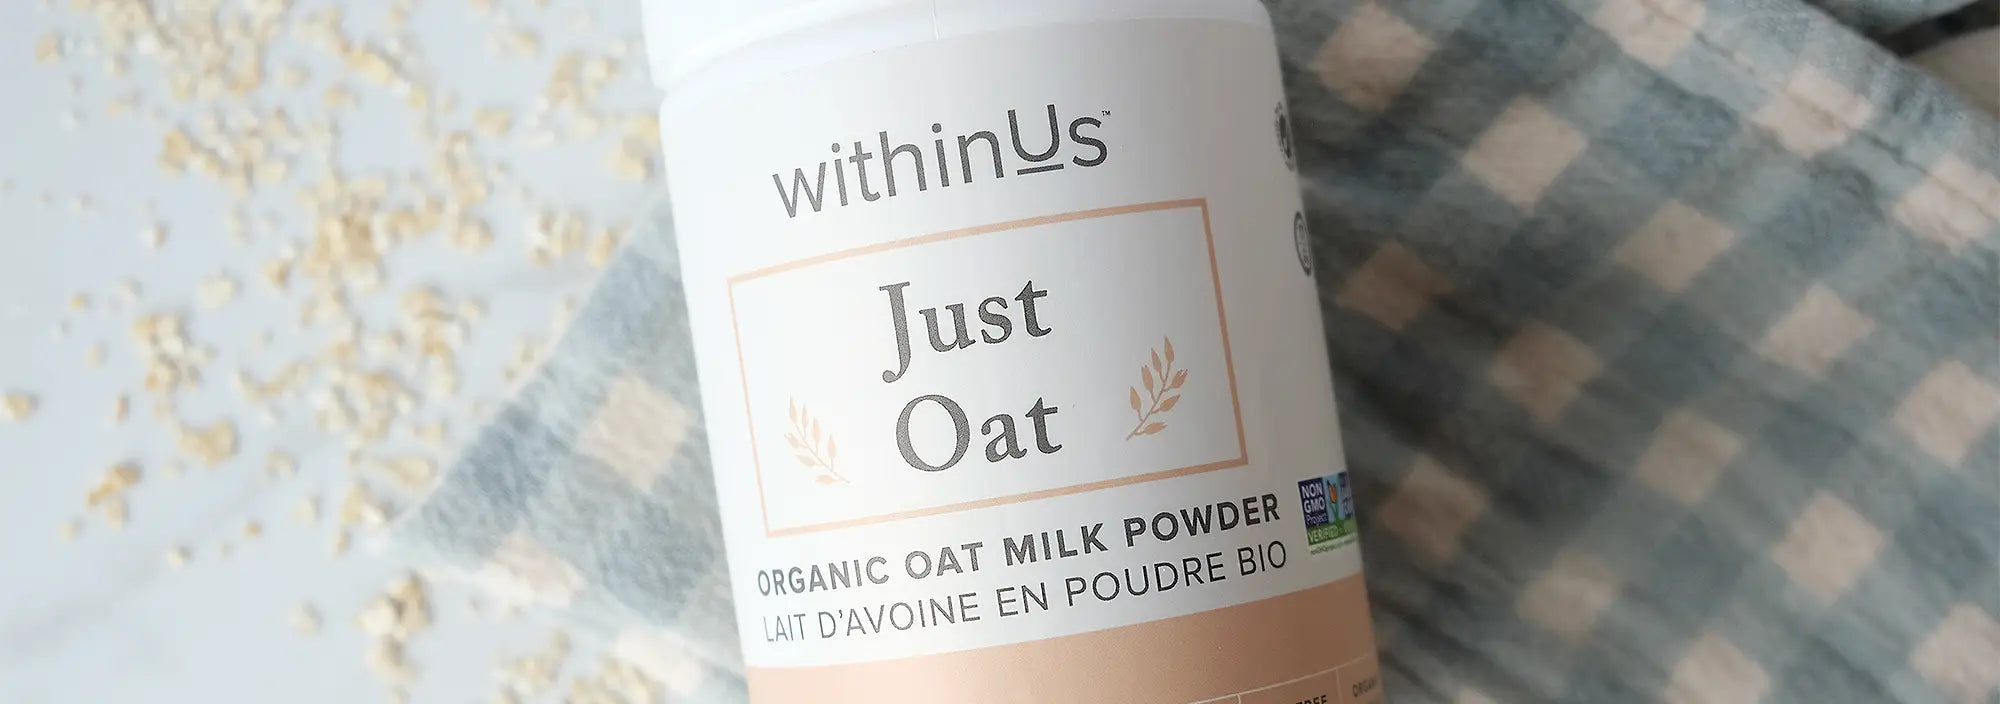 Instant oat milk at your fingertips 